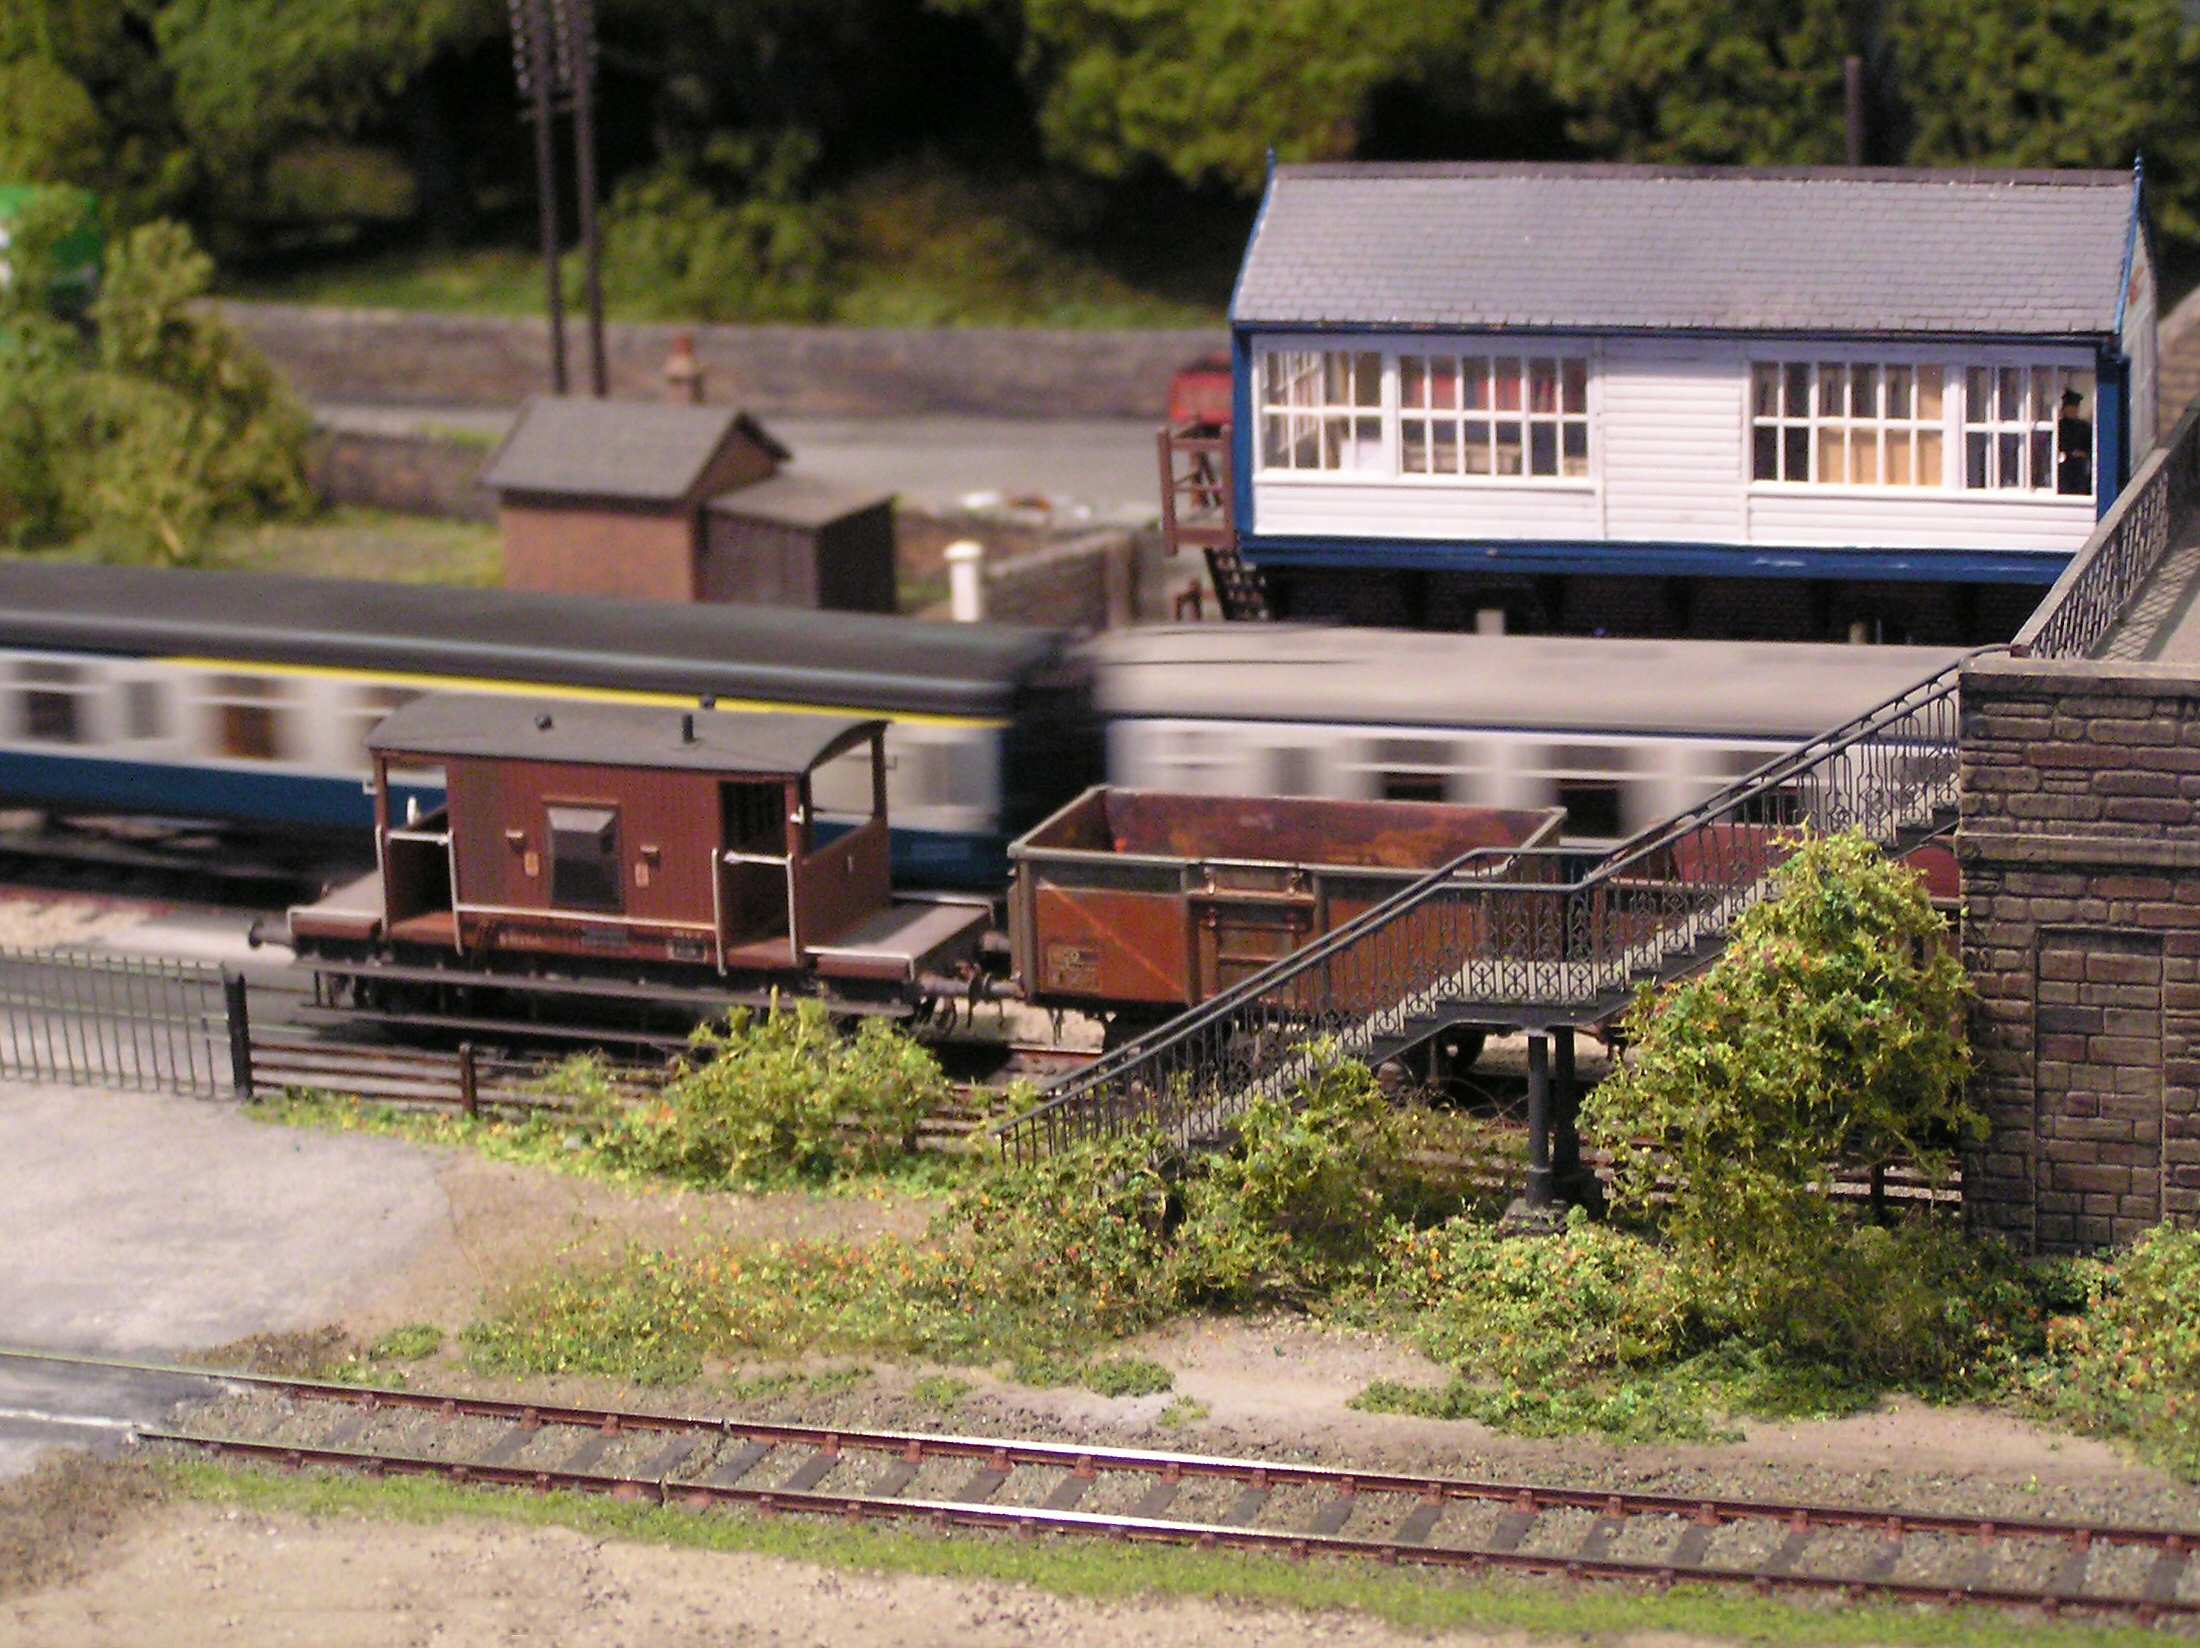 Model Railway Steam Diesel Electric Train Set Photographic